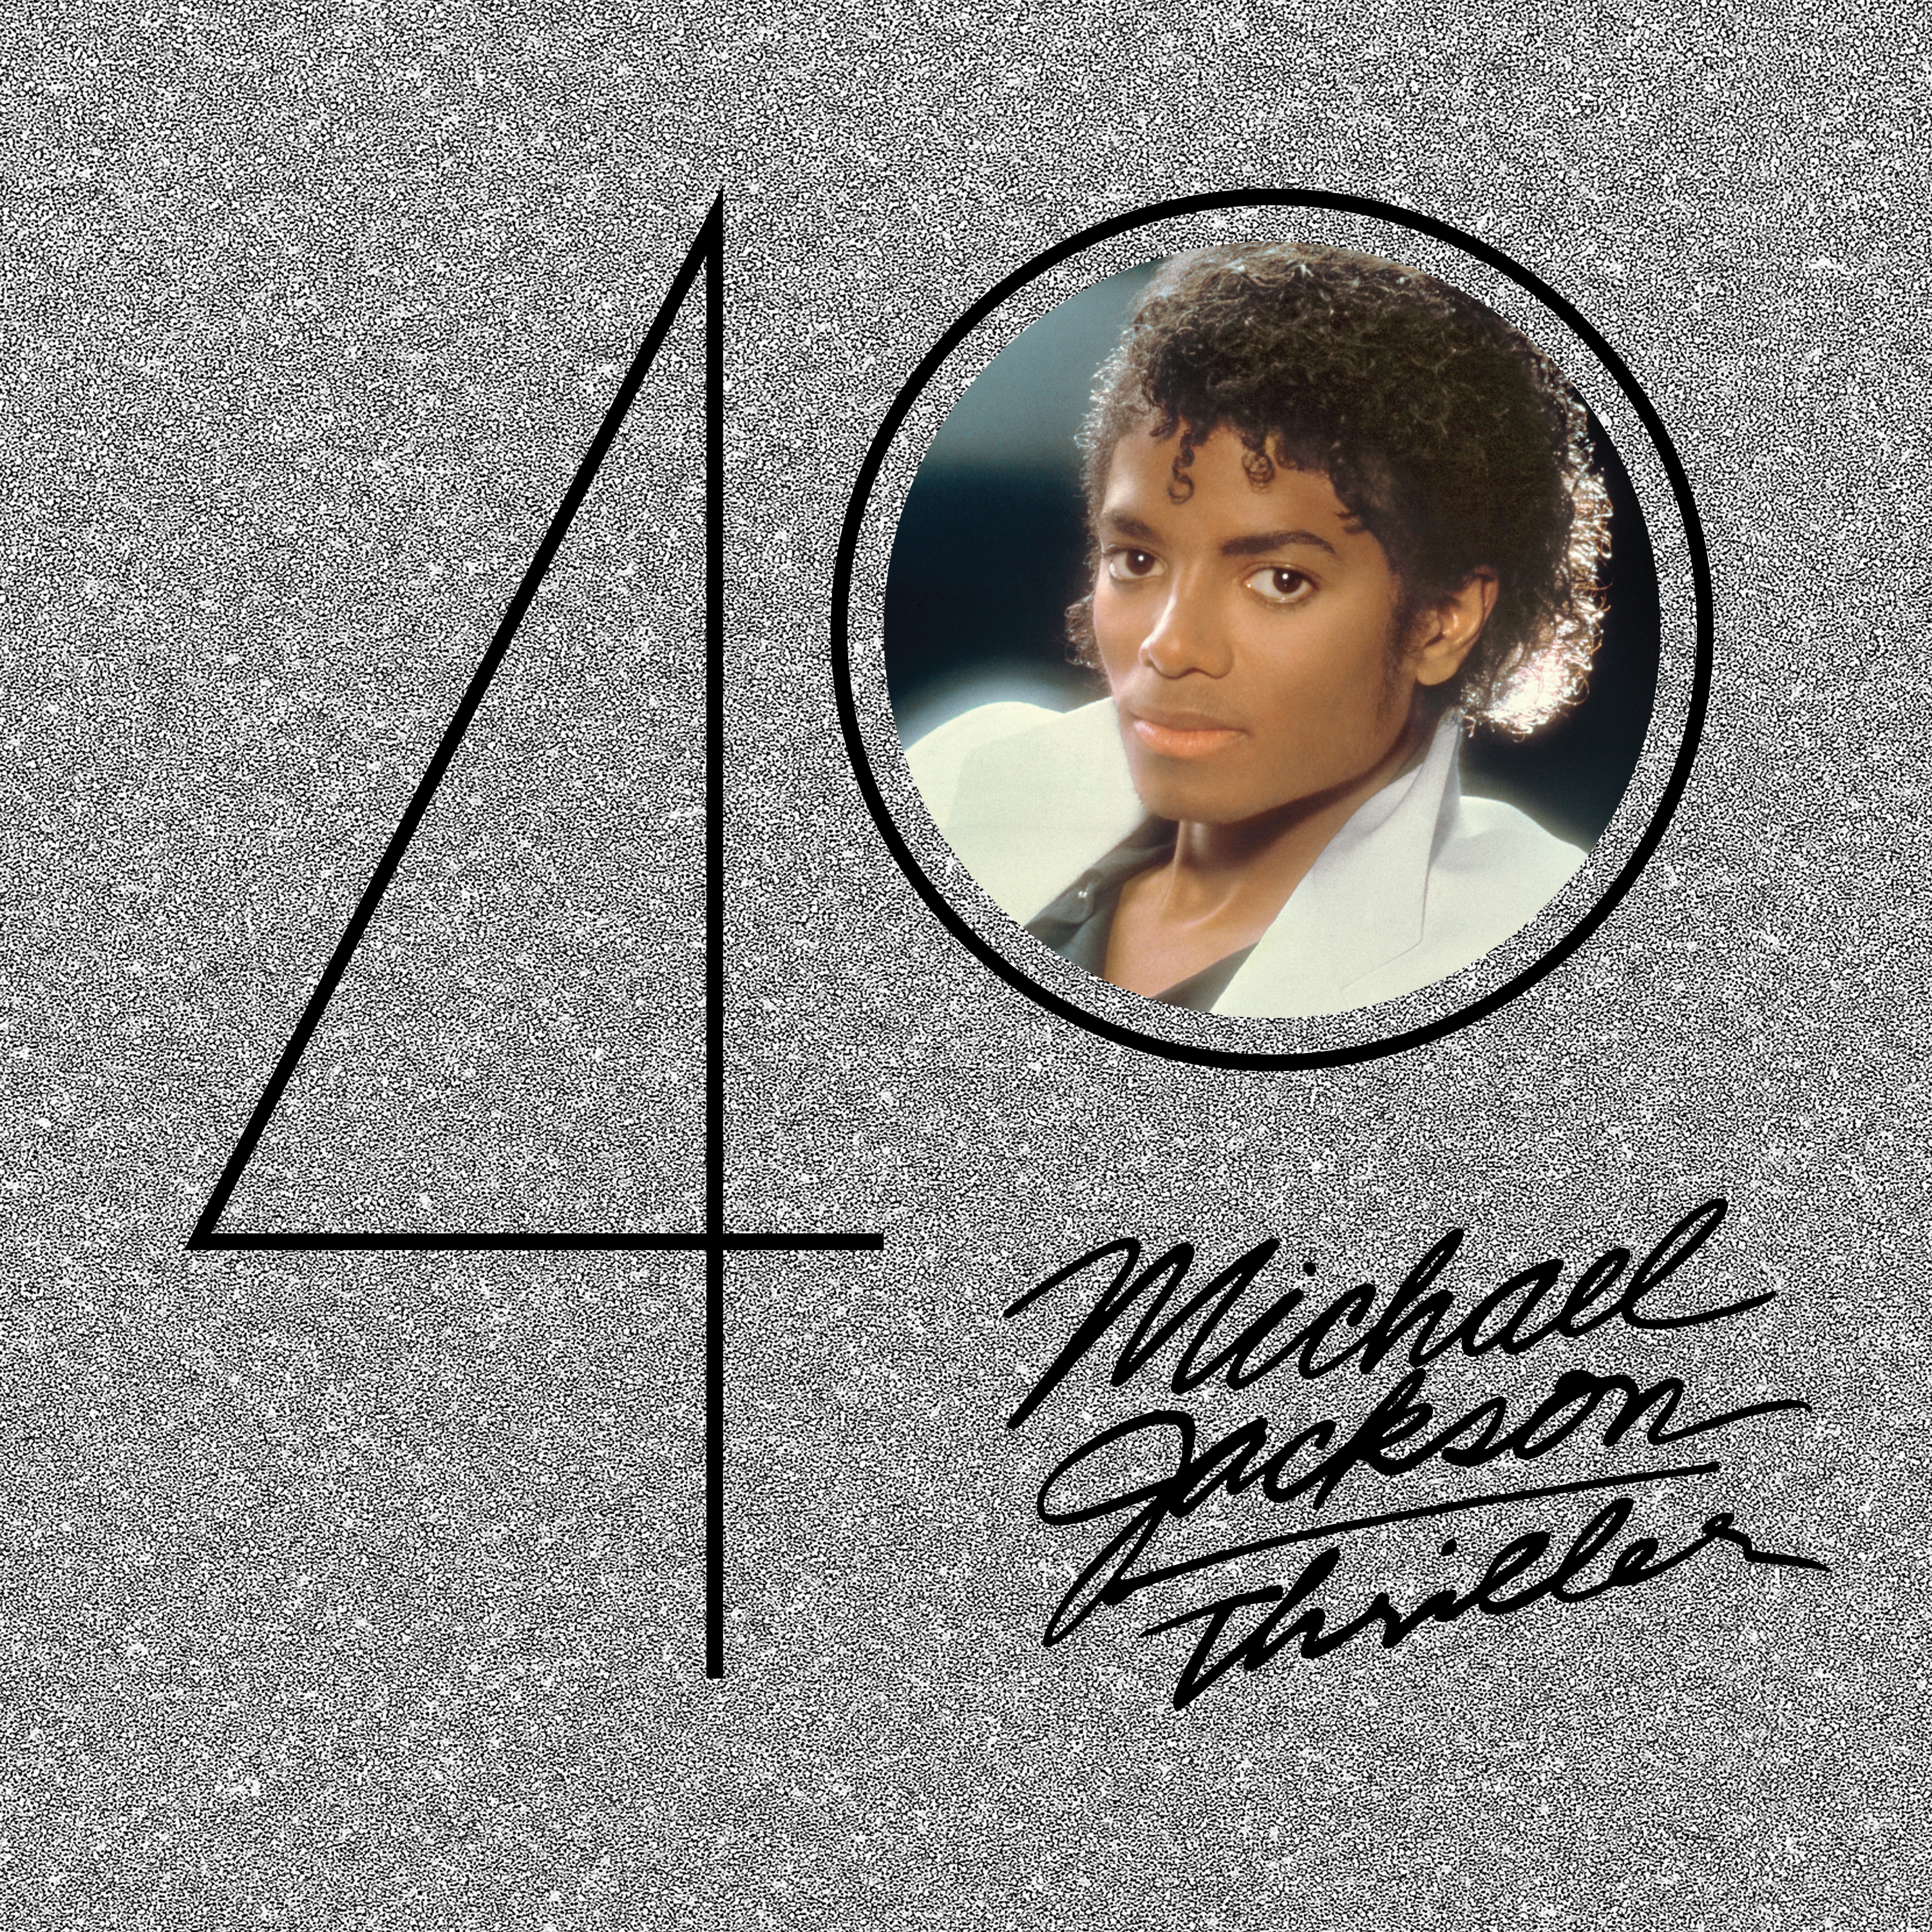 Michael Jackson
“Thriller 40”
